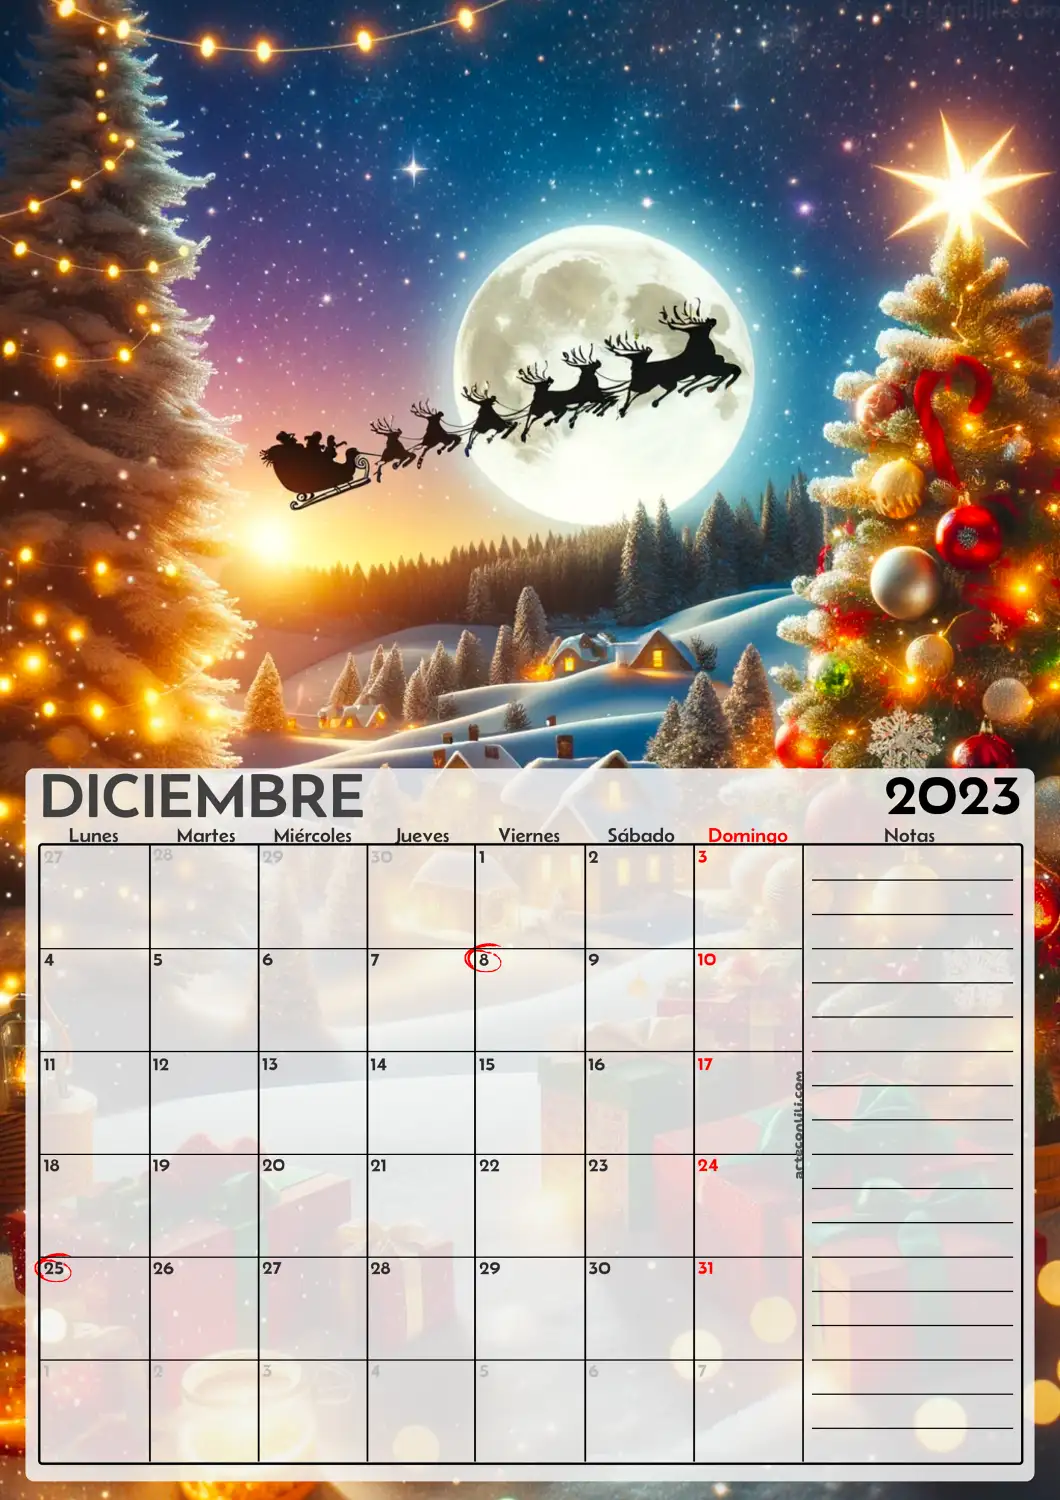 calendario diciembre 2023 motivos navidad arteconlili.com5